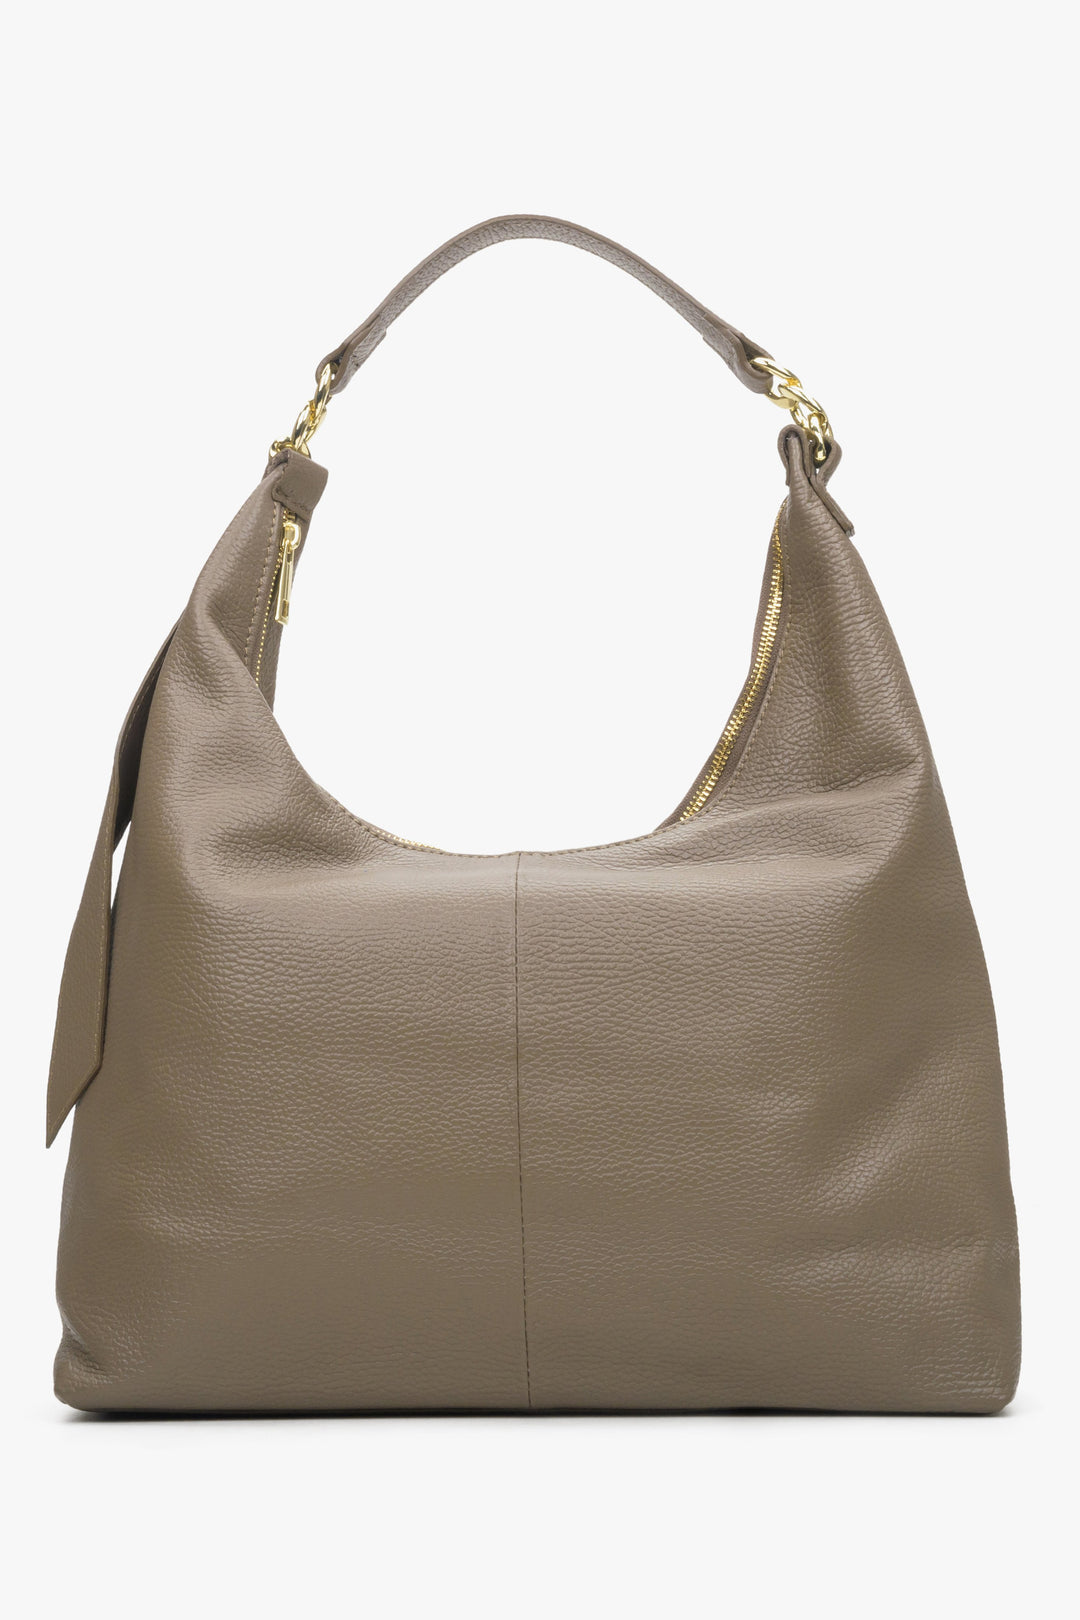 Women's beige shopper bag made of Italian genuine leather by Estro.